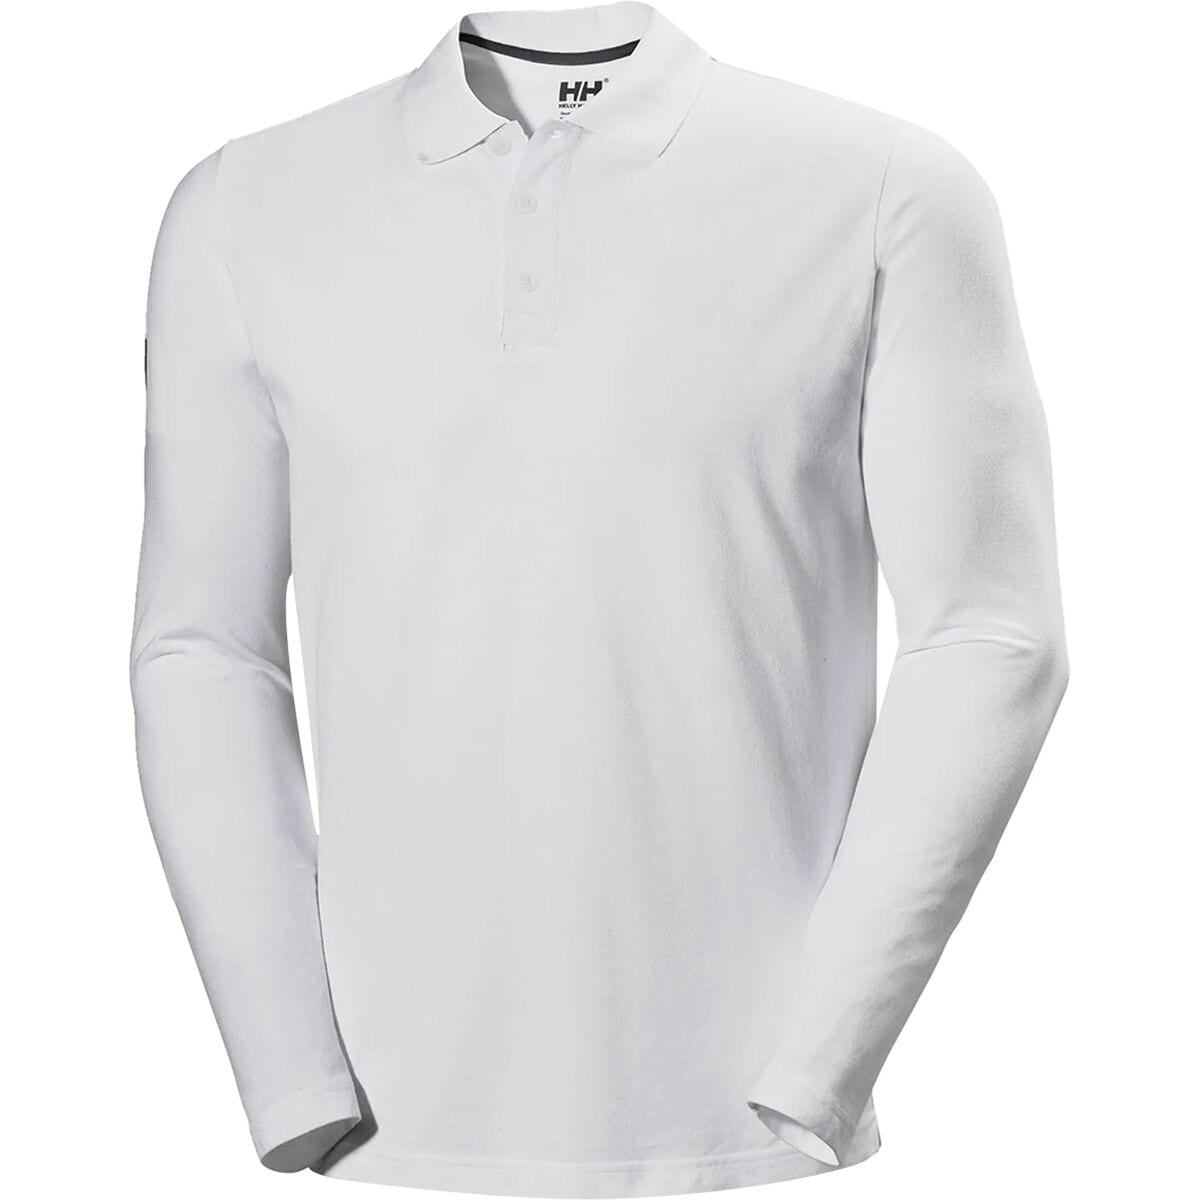 Crewline Long-Sleeve Polo Shirt - Men